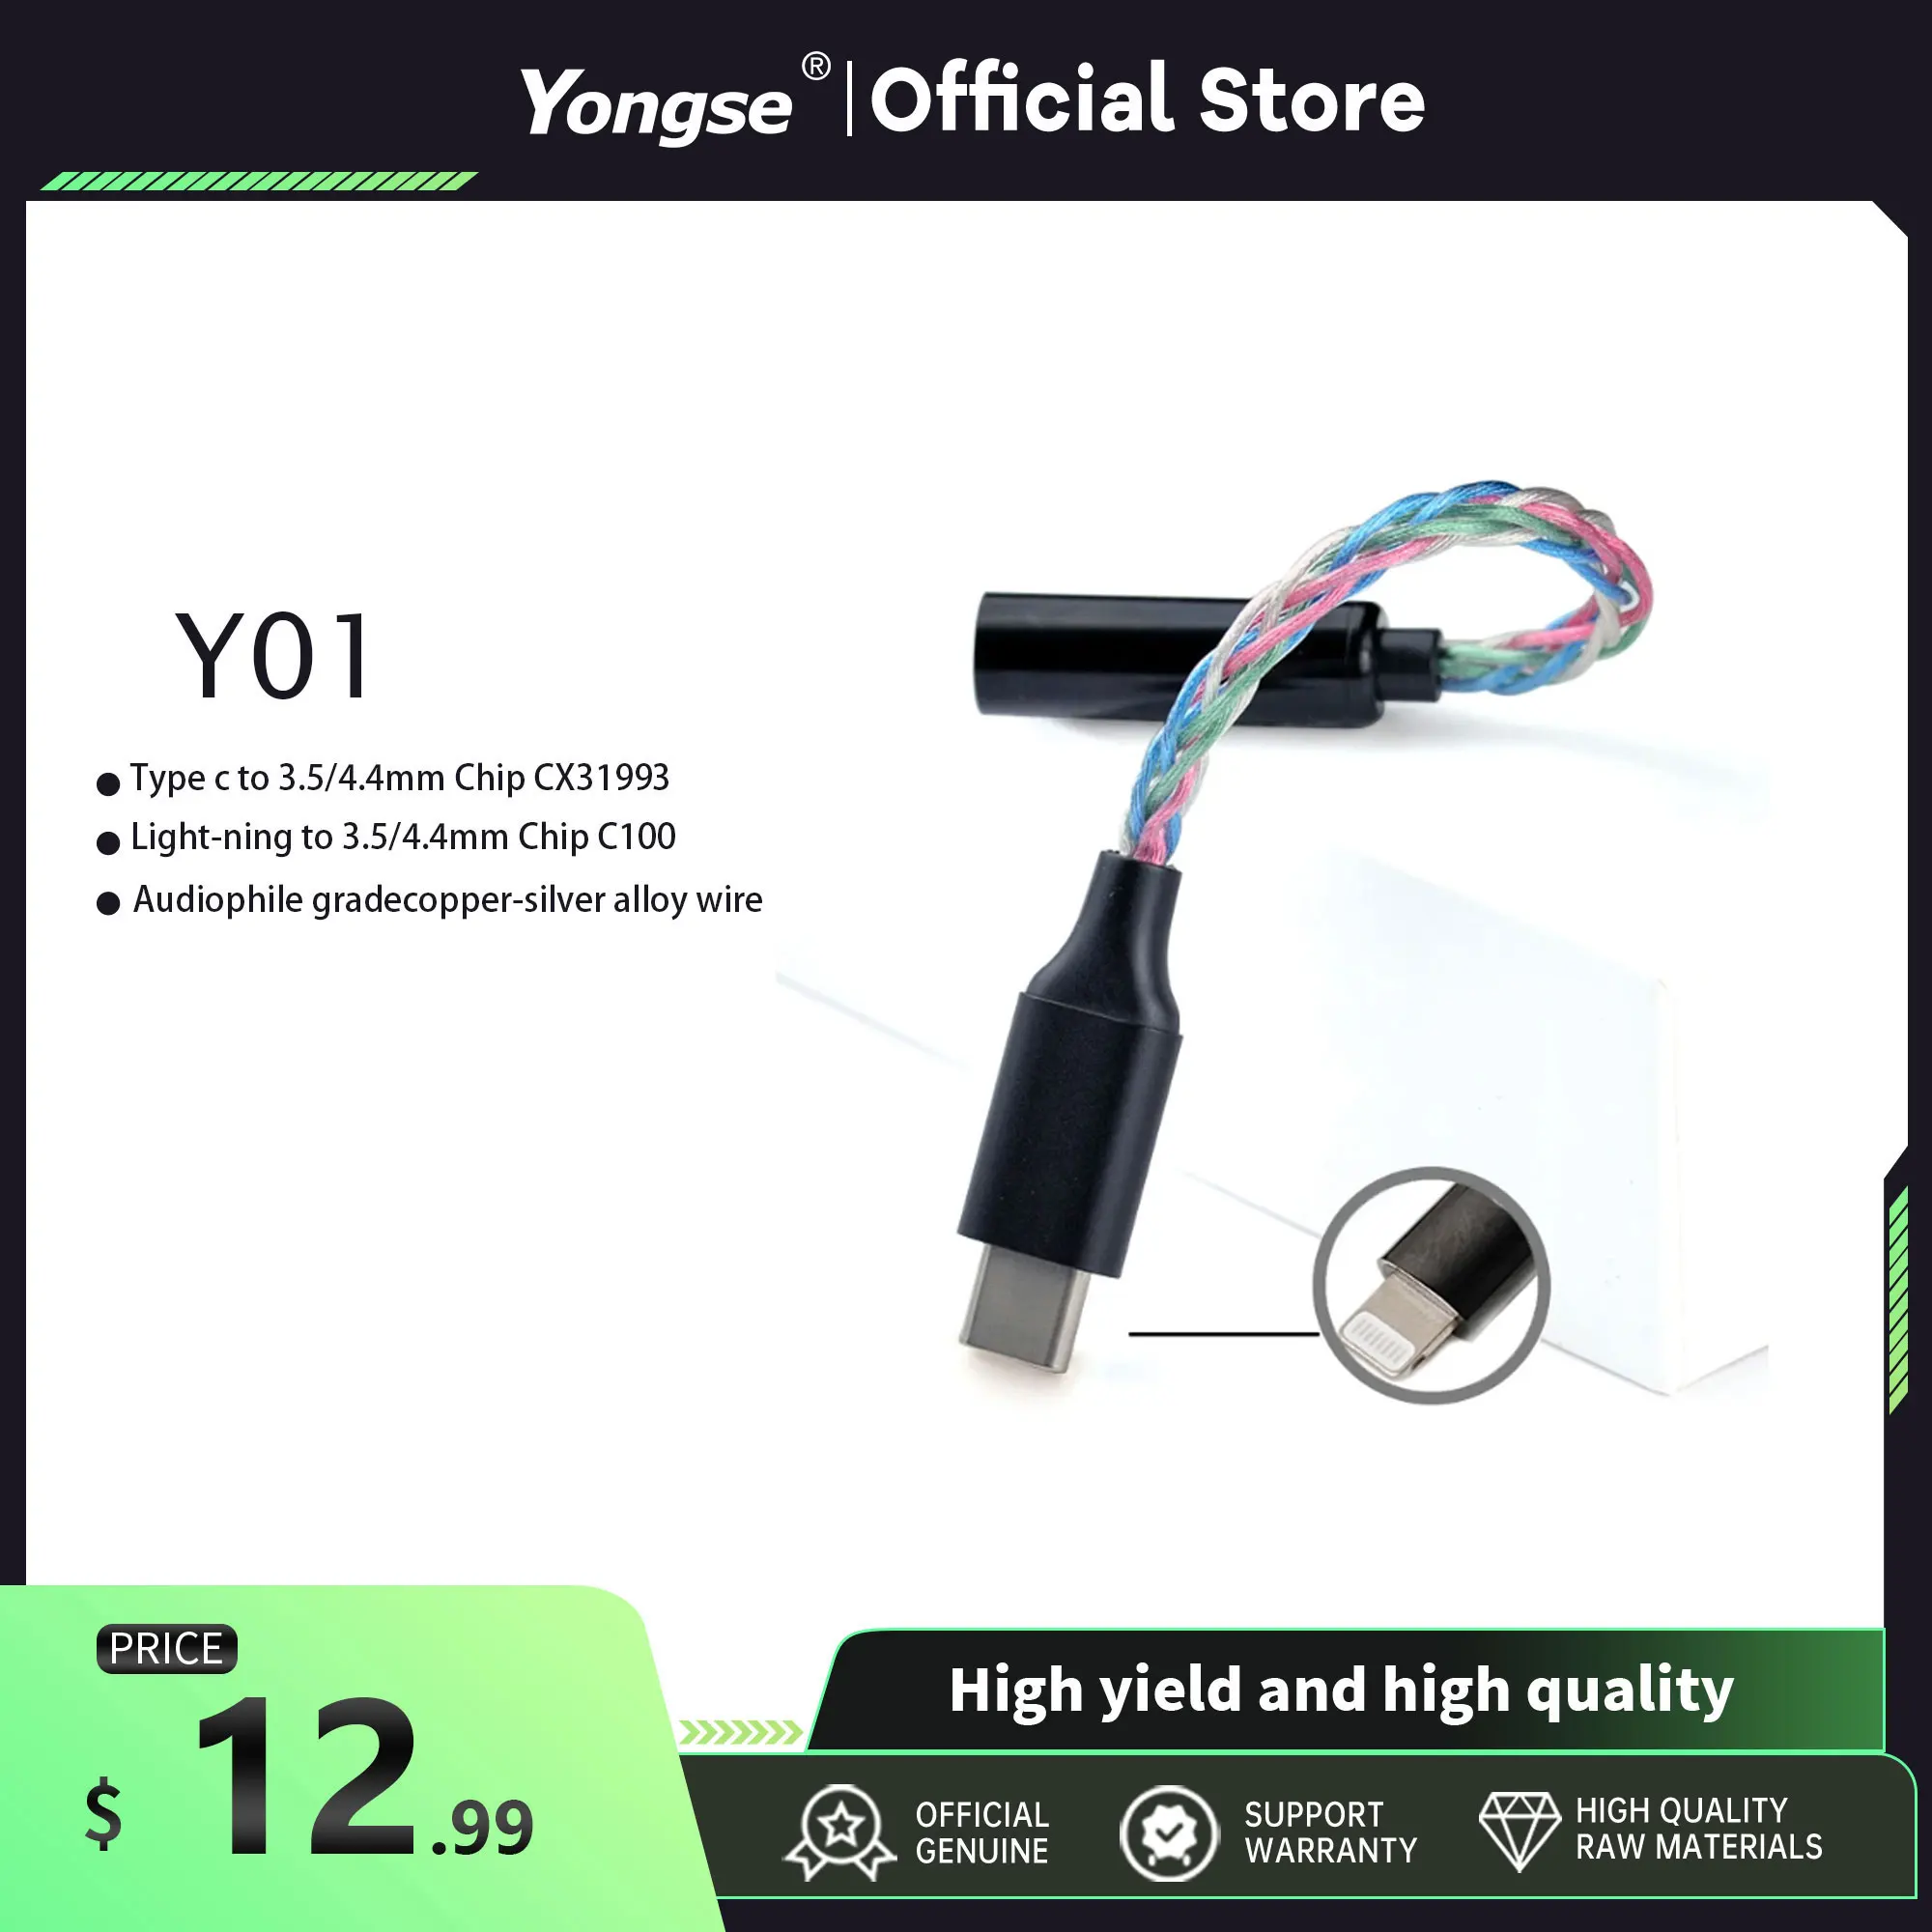 YONGSE 이어폰 앰프 디지털 디코더 케이블 OTG DAC 어댑터, Y01 타입 C 라이트닝, 칩 CX31993 CX31998 C100, 3.5mm, 4.4mm